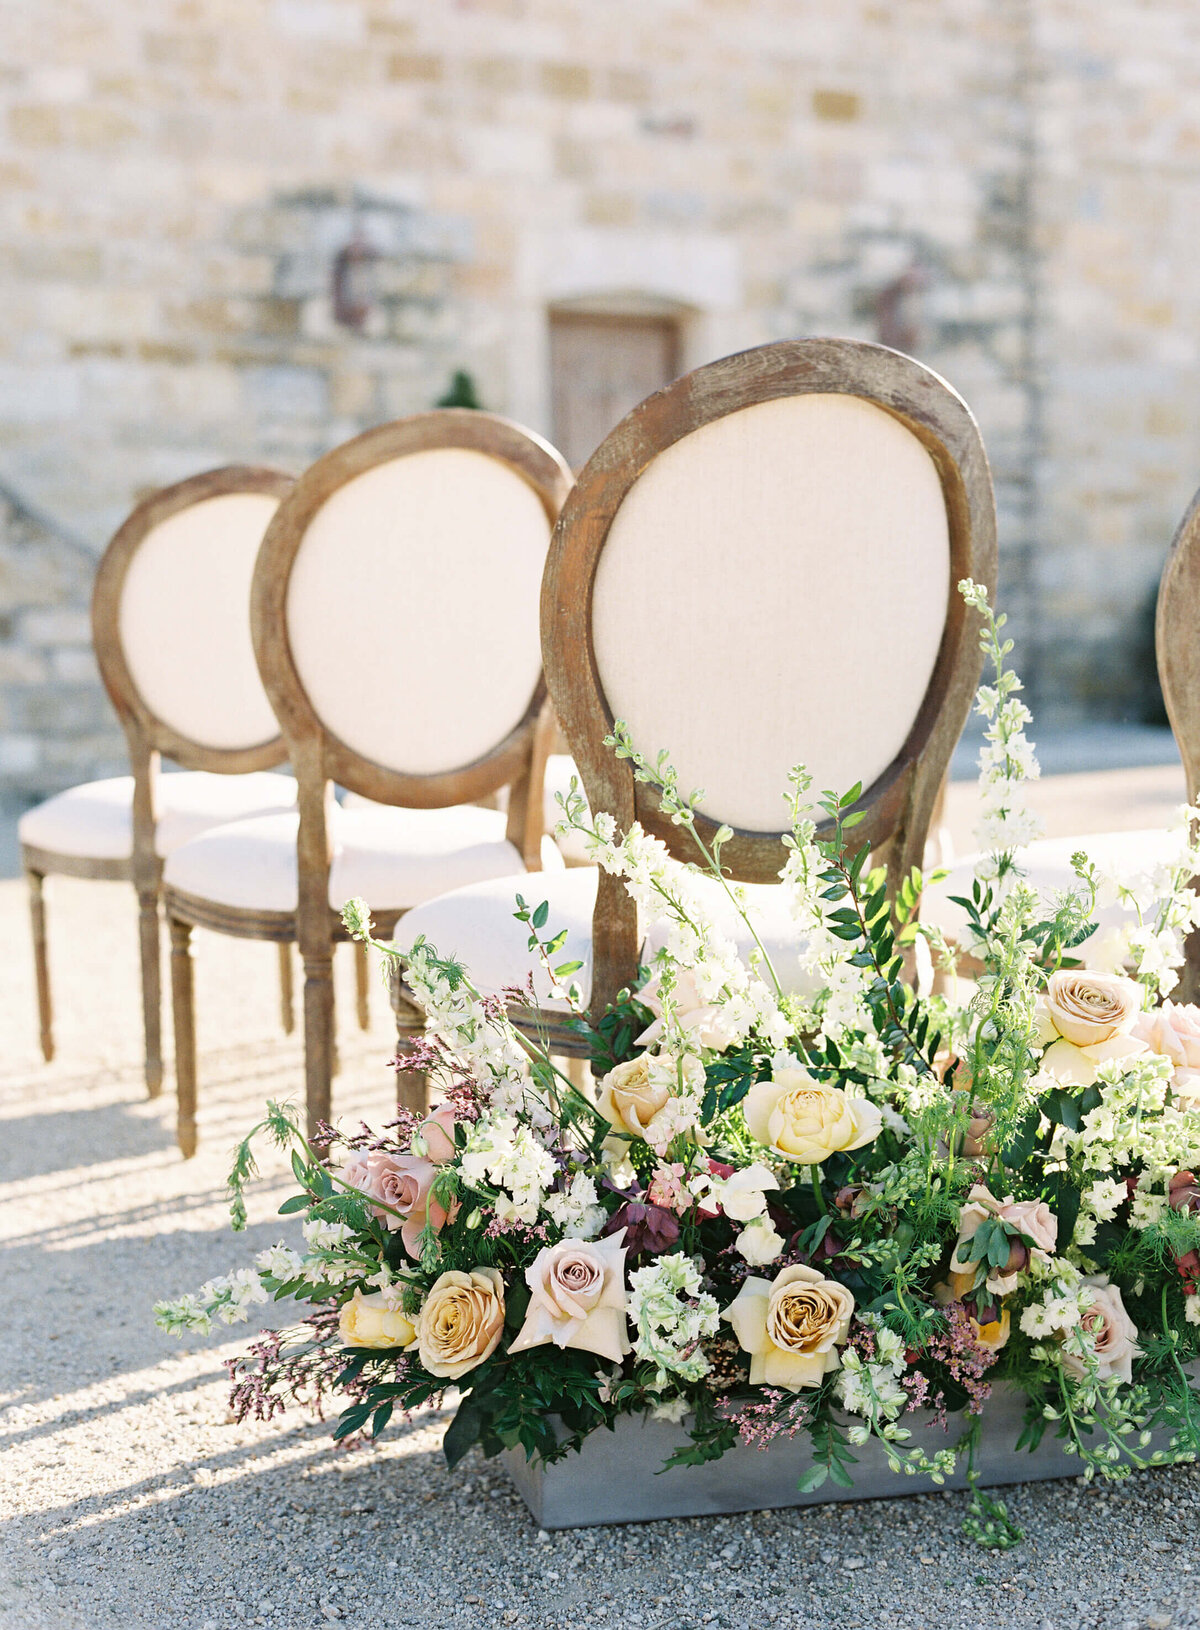 Sunstone-Winery- Destination Wedding Florist - Luxury Wedding Flowers - Autumn Marcelle Design (262)